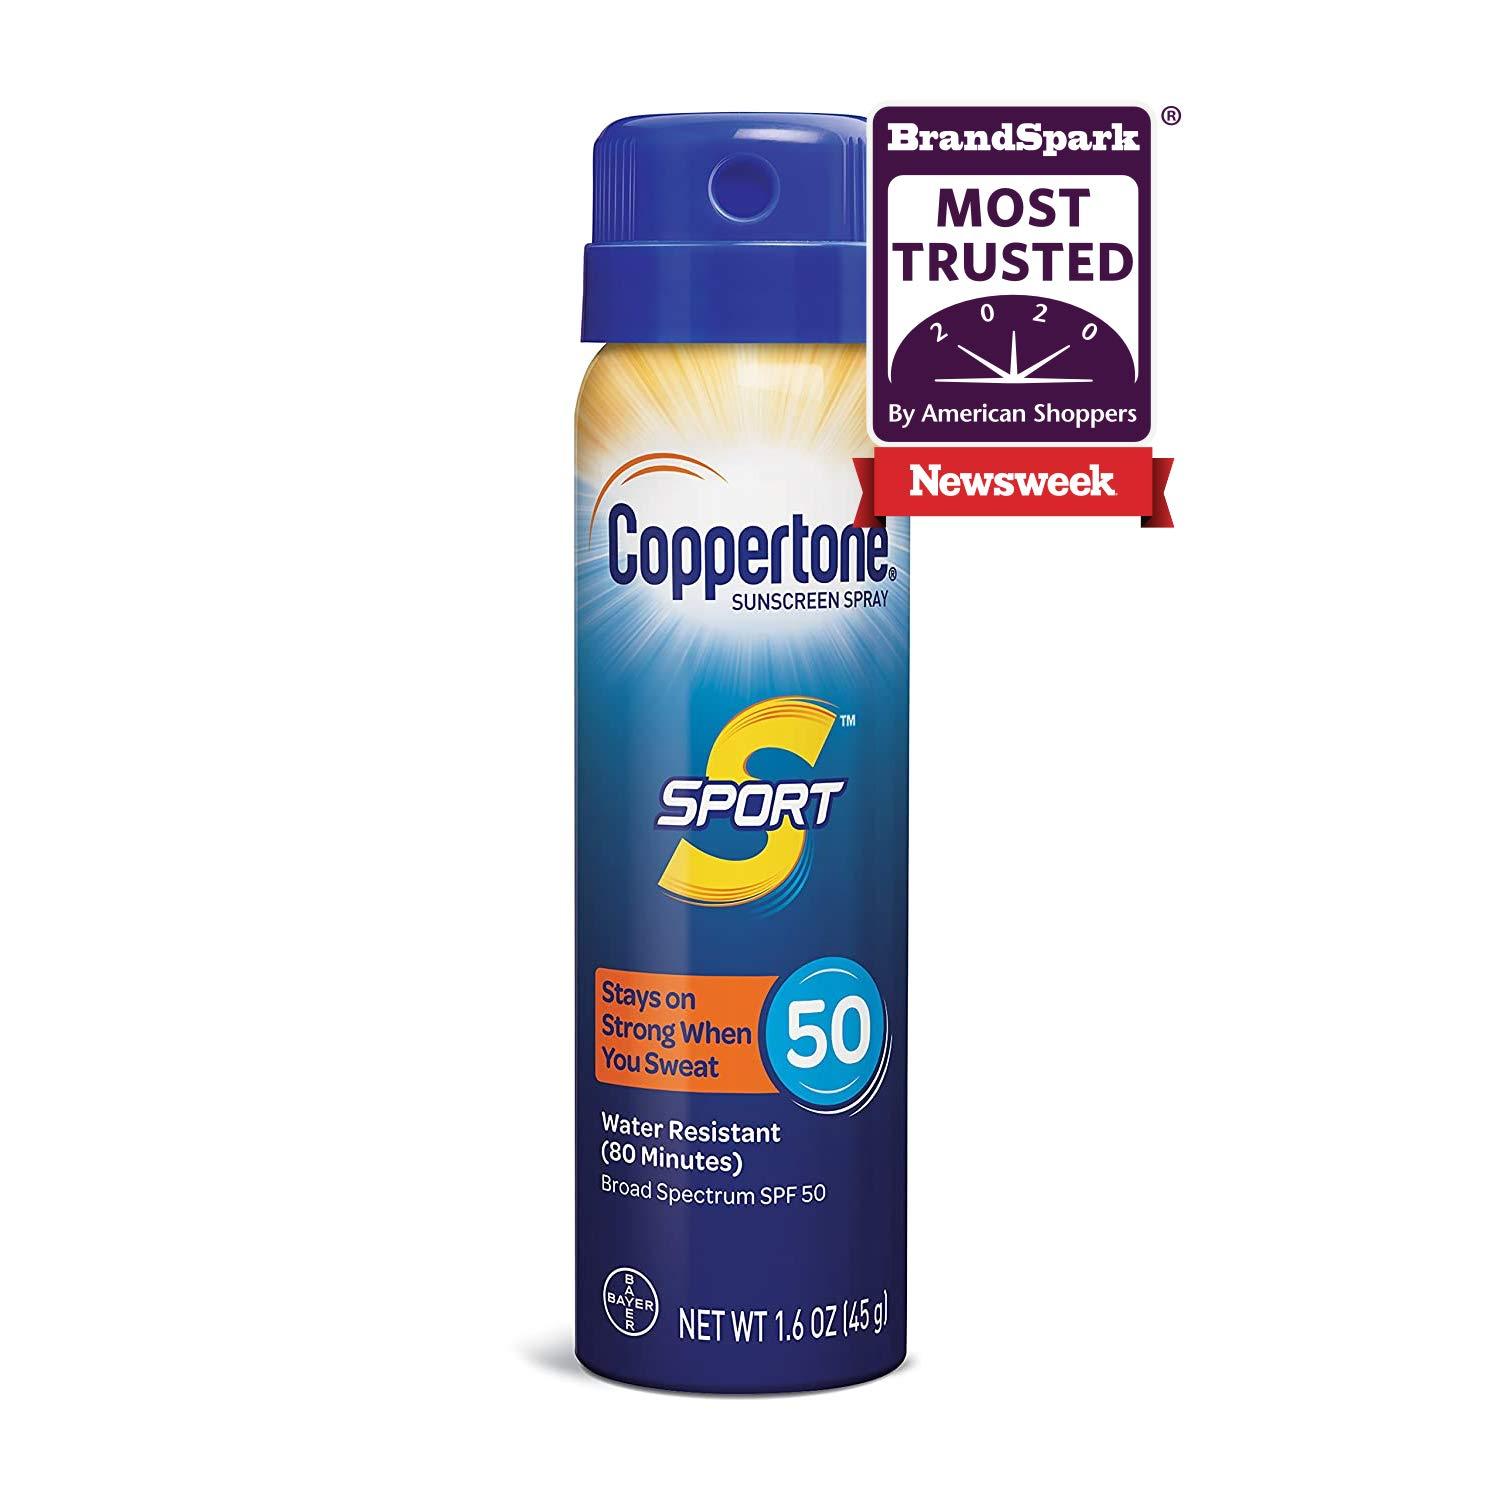 Coppertone SPORT Continuous SPF 50 Broad Spectrum Sunscreen Spray for $1.43